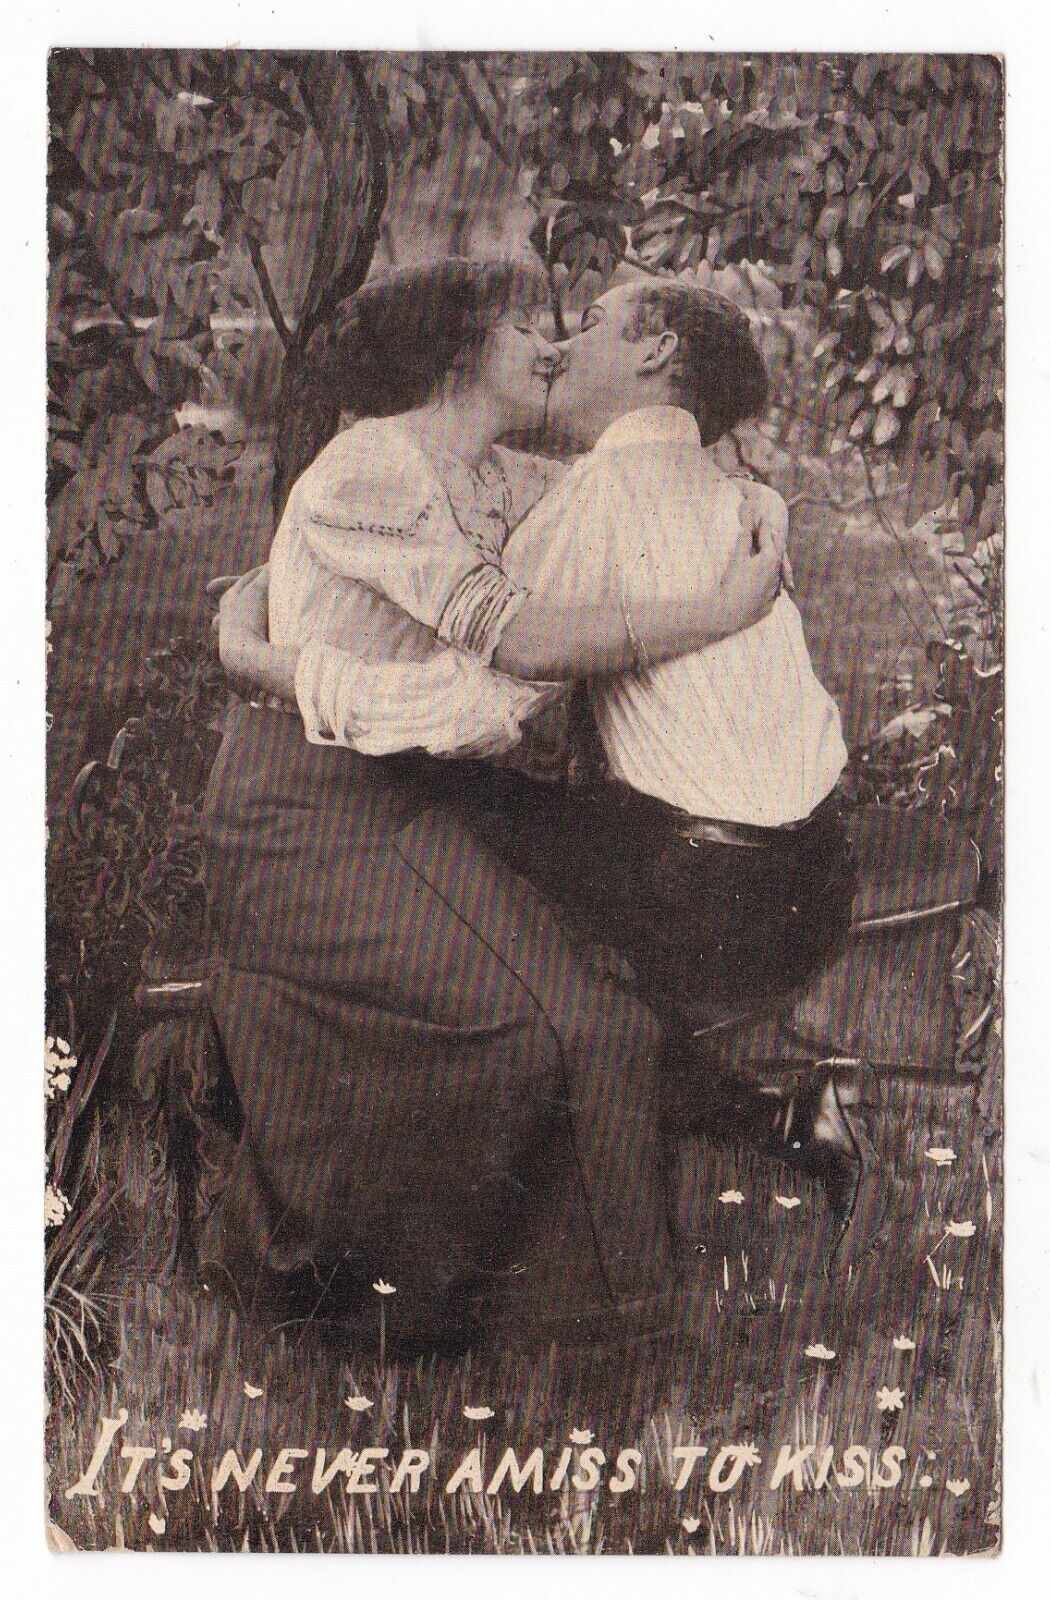 1913 WAHOO NEBRASKA ROMANTIC KISS RISQUE VINTAGE POSTCARD WESTON NE HUBISTA